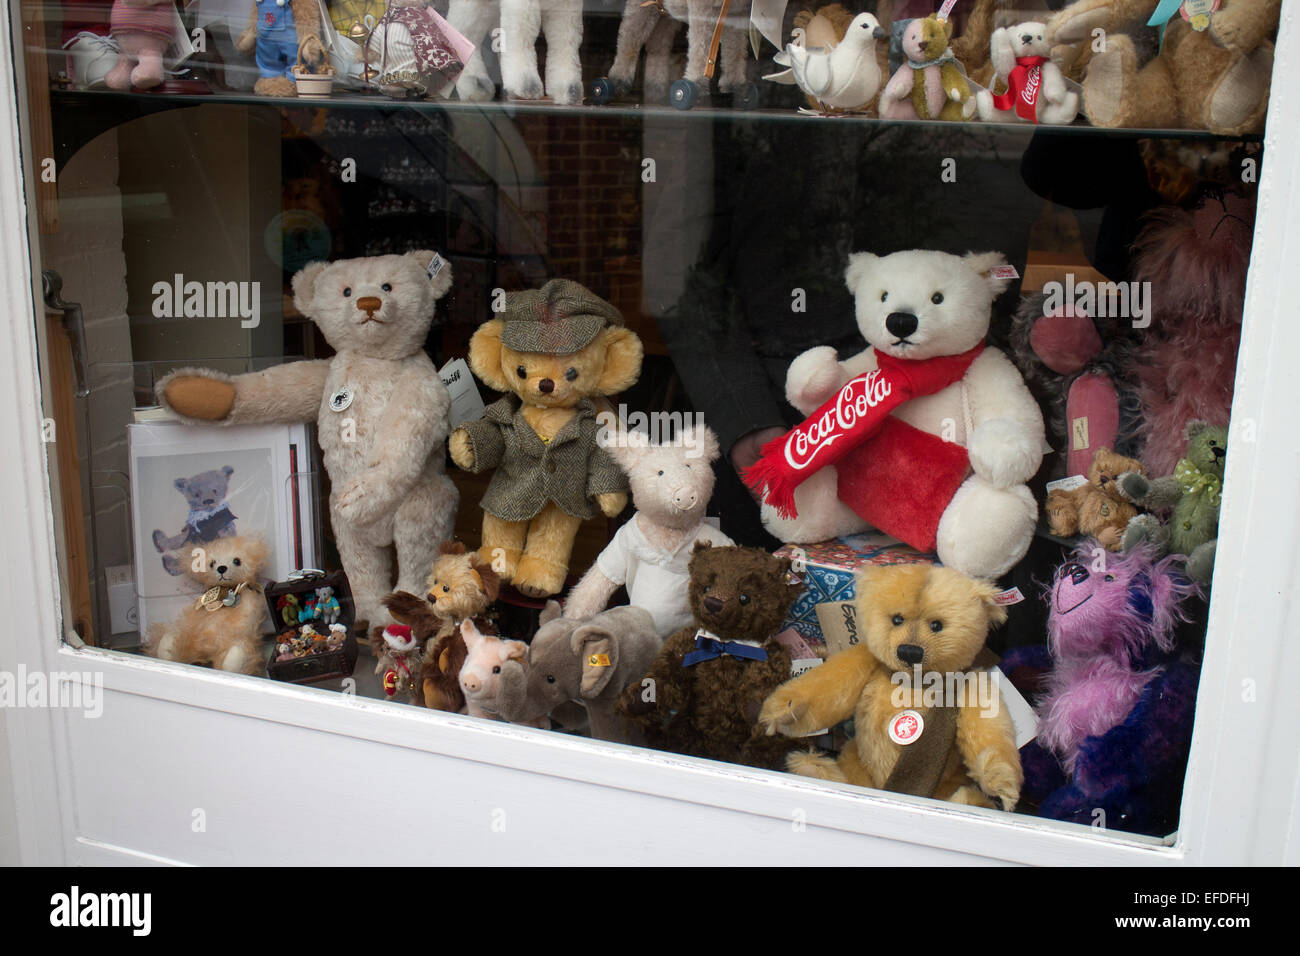 Teddy bear shop -Fotos und -Bildmaterial in hoher Auflösung – Alamy